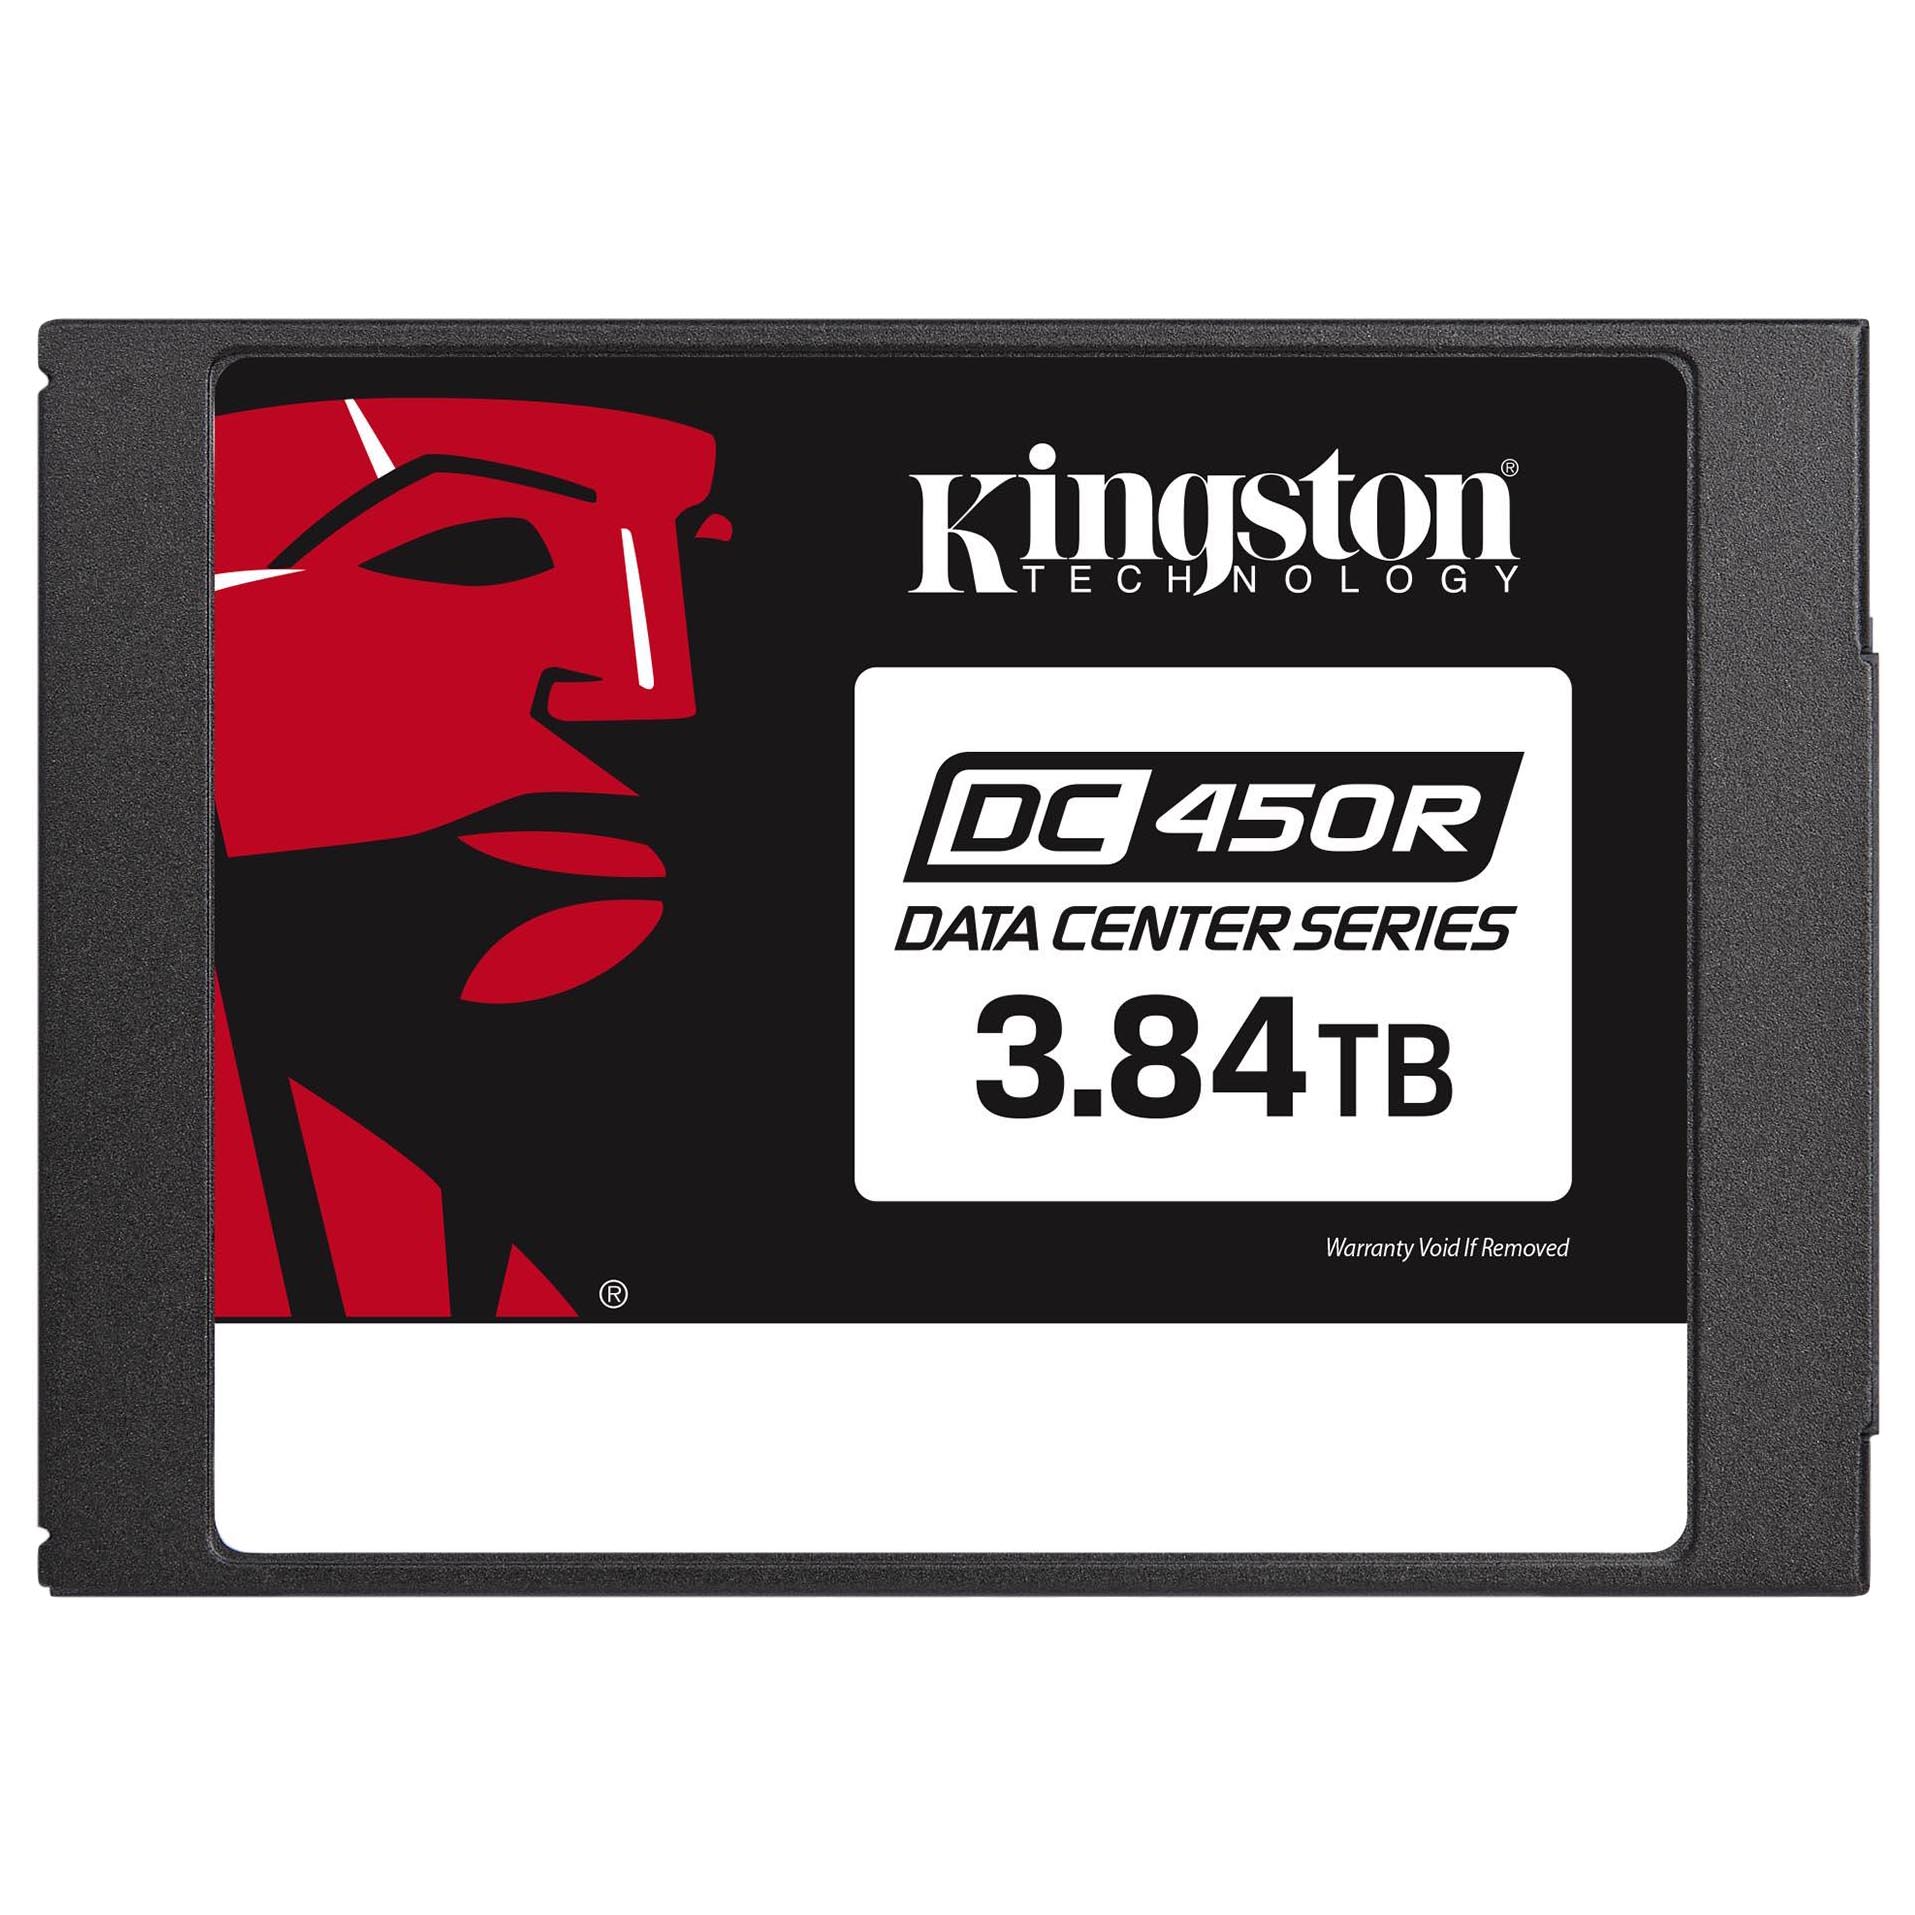 цена Внутренний твердотельный накопитель Kingston DC450R, SEDC450R/3840G, 3,84Тб, 2.5